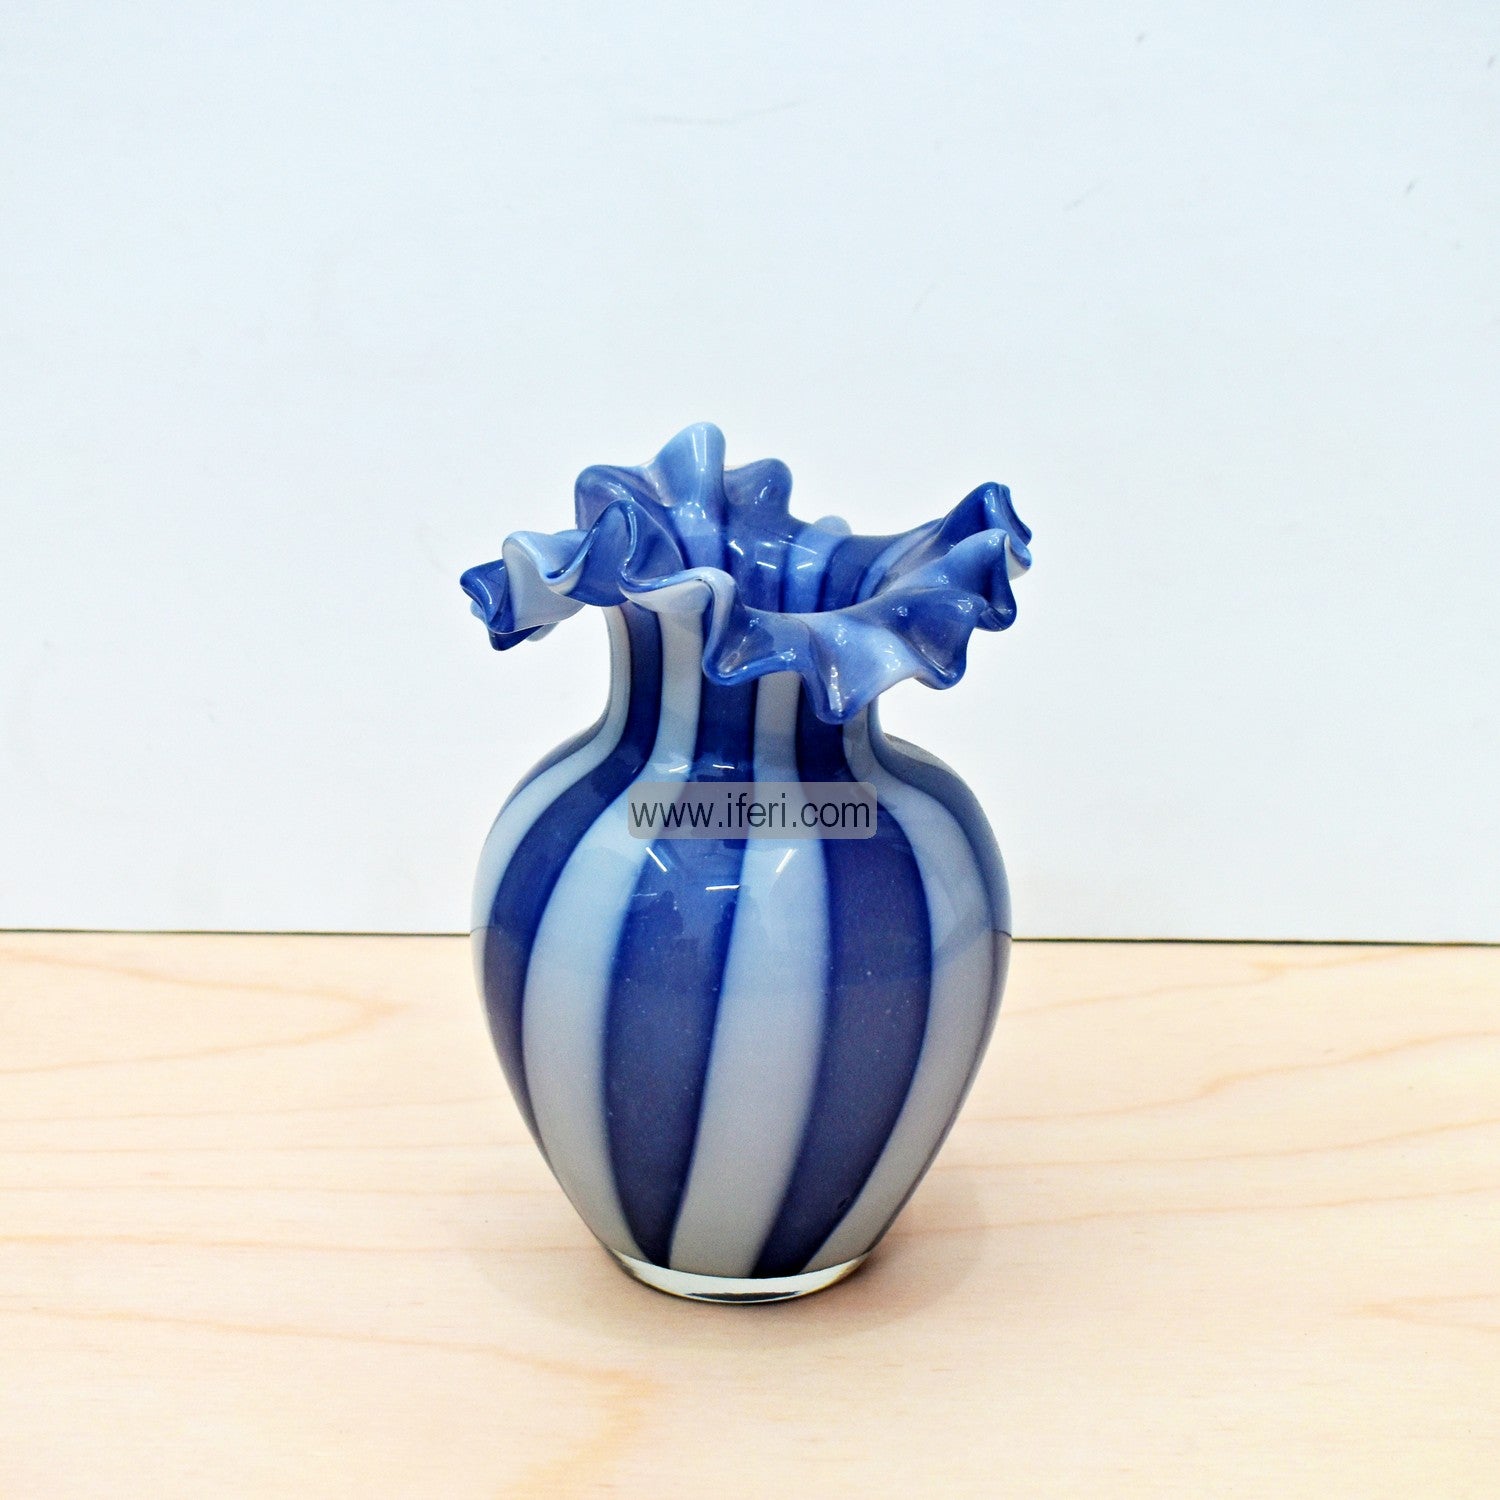 7 Inch Glass Decorative Flower Vase FT1363